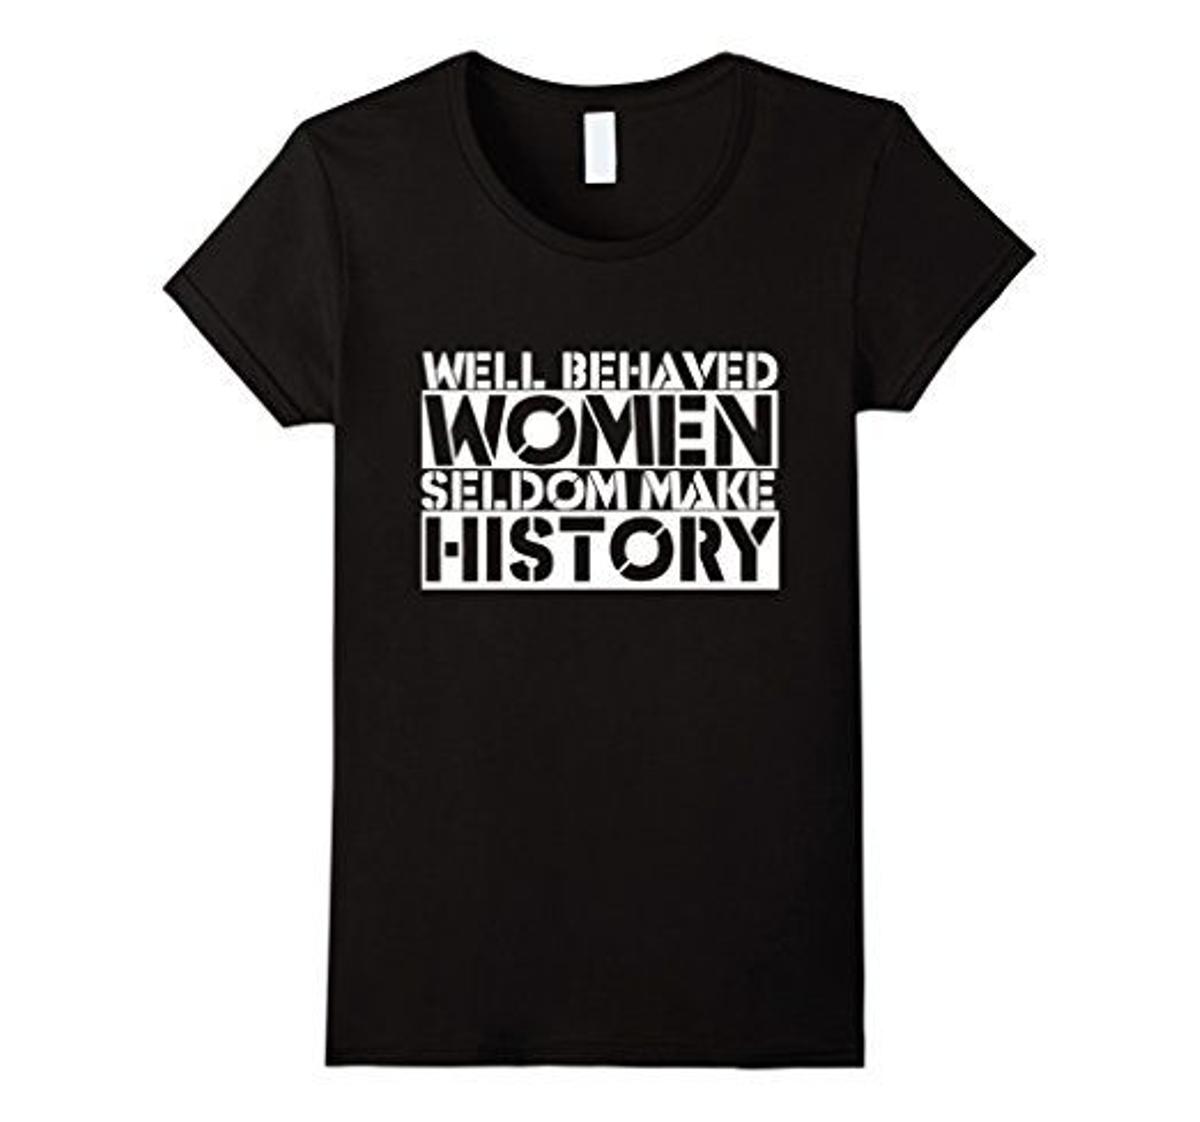 Camisetas feministas: Well behaved women seldom make history